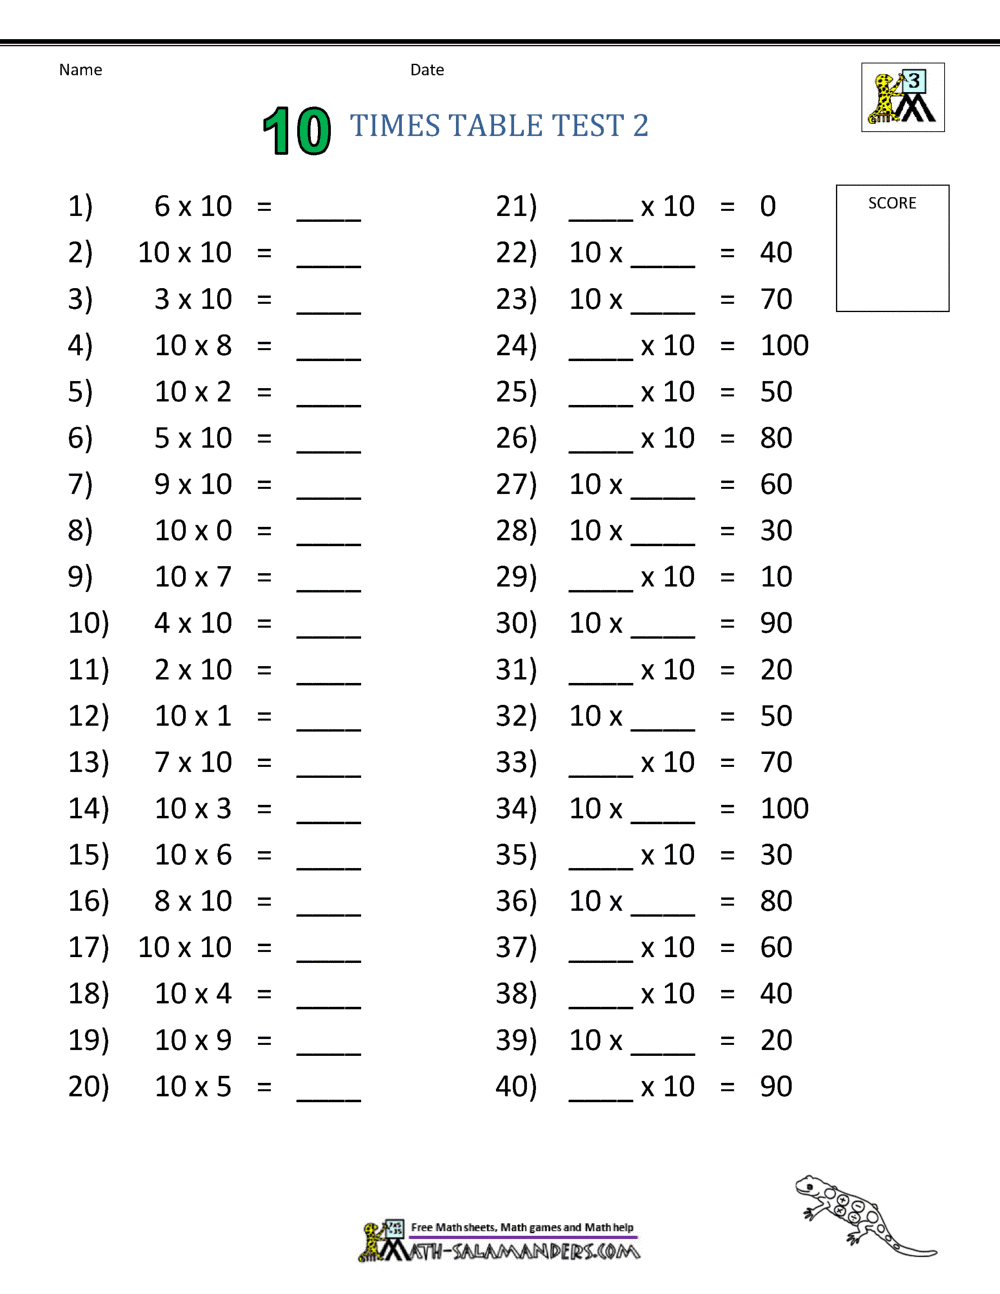 8 Times Table. Таблица умножения на 6. Time Tables Tests - 2 5 10. Test Table 4:3. Тест умножение на 3